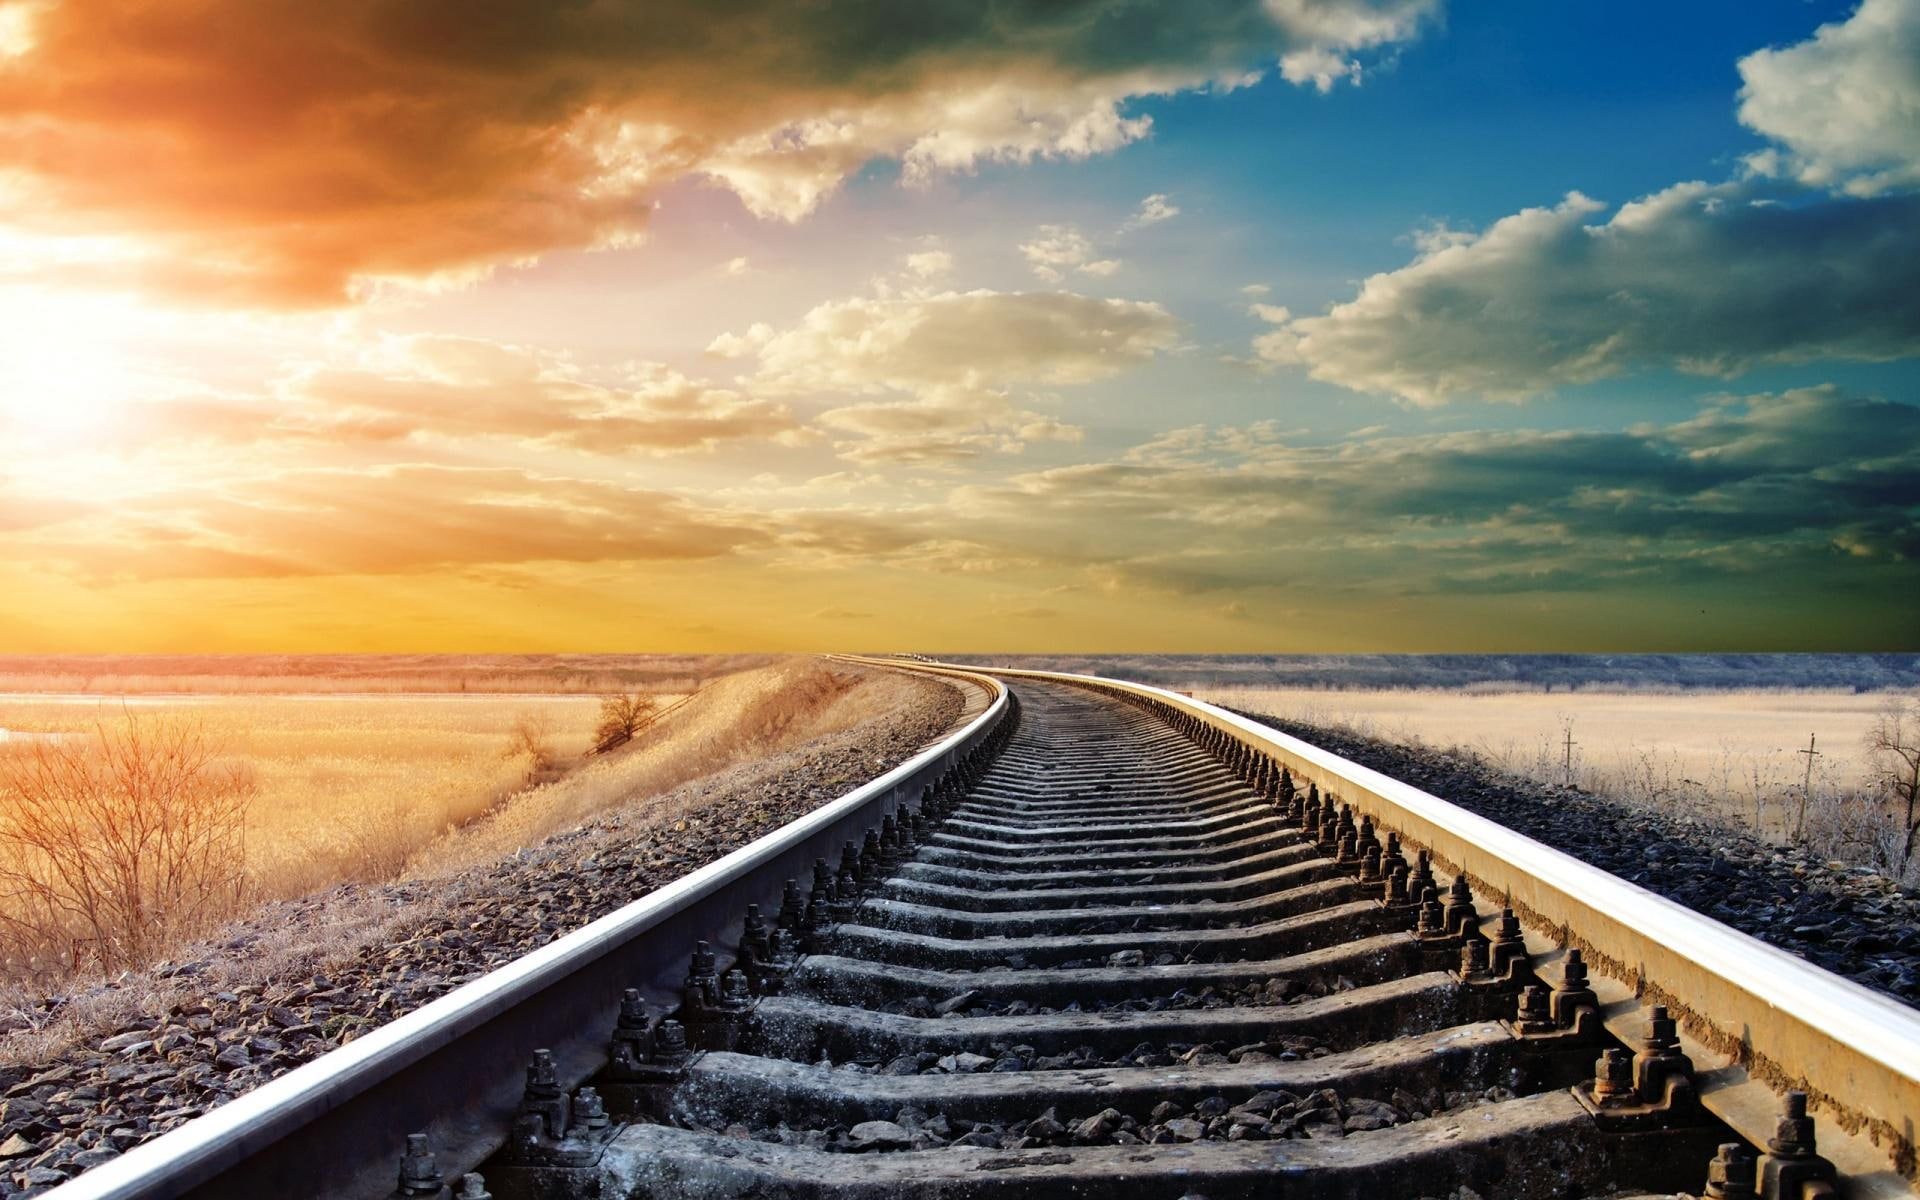 Train Tracks To The Setting Sun, rail road, gravel, fields, clouds